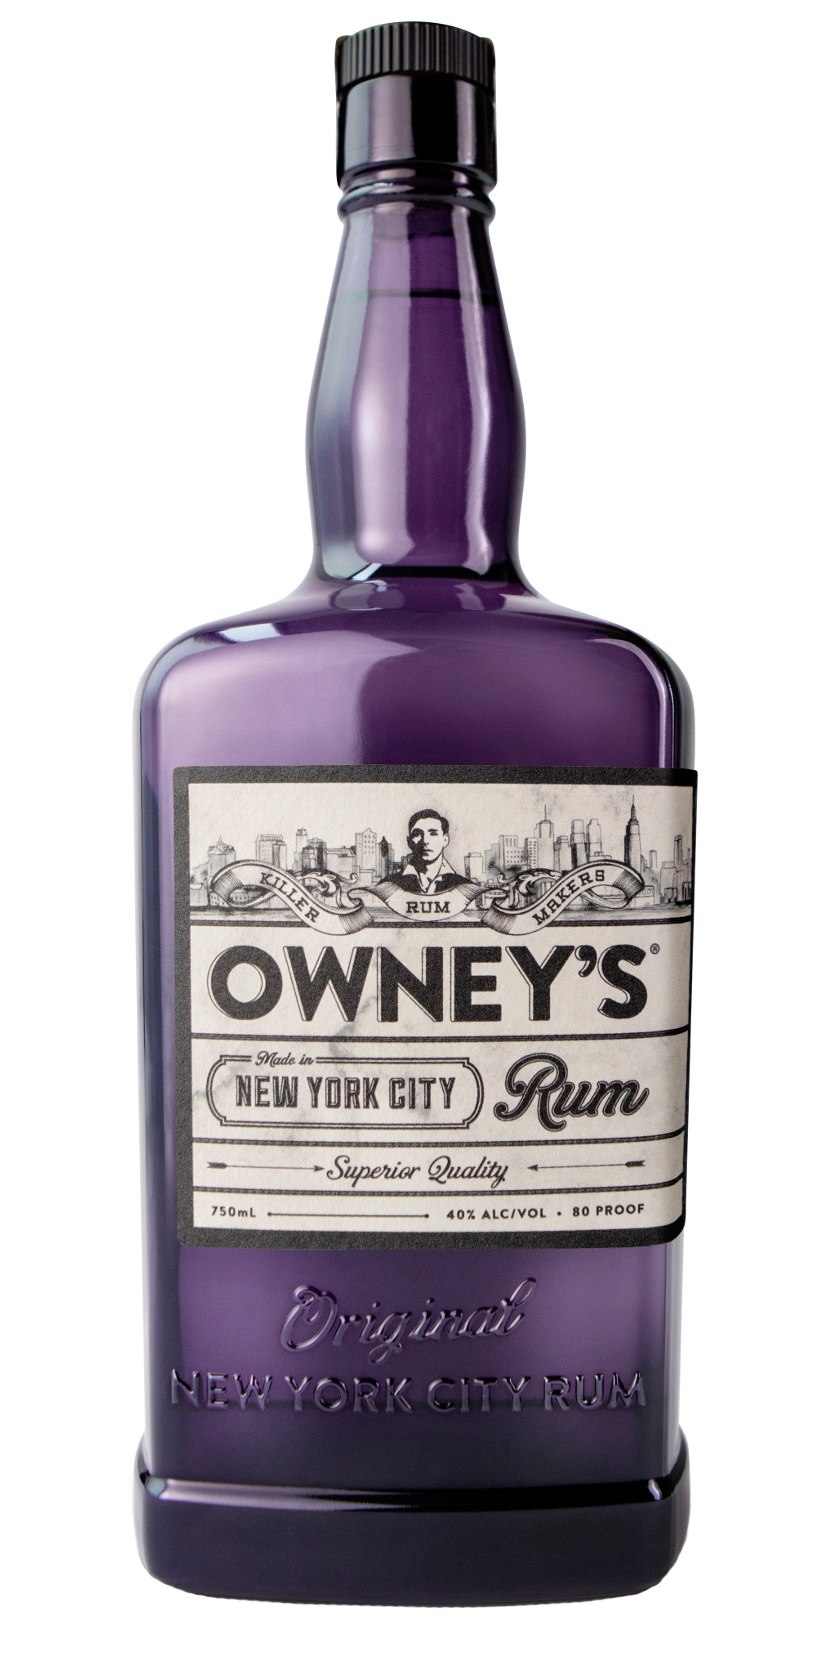 Owney's New York City Rum                                                                           